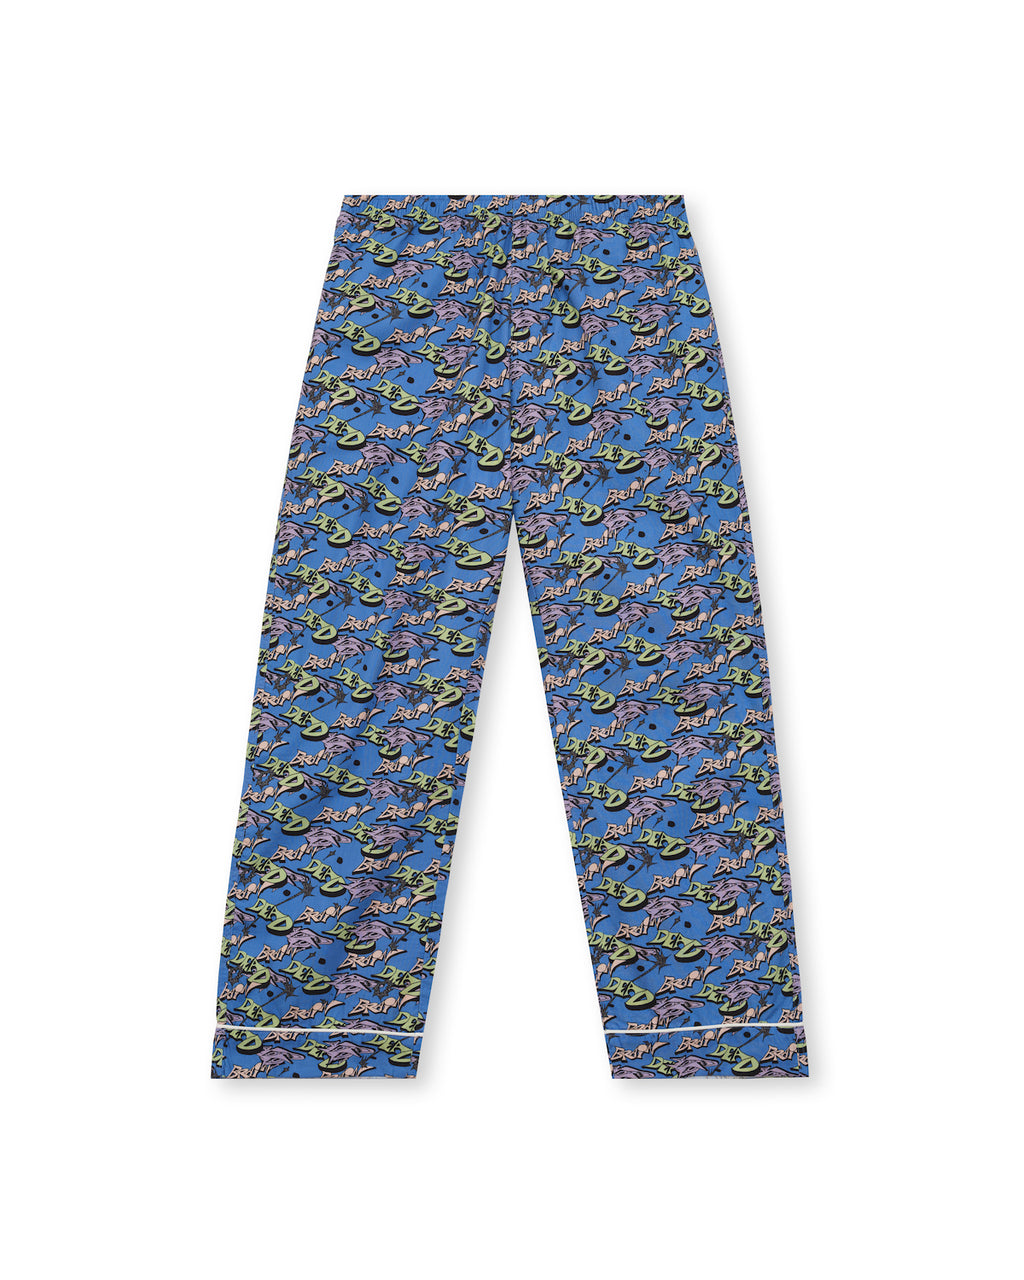 Erratic Pajama Bottom - Multi